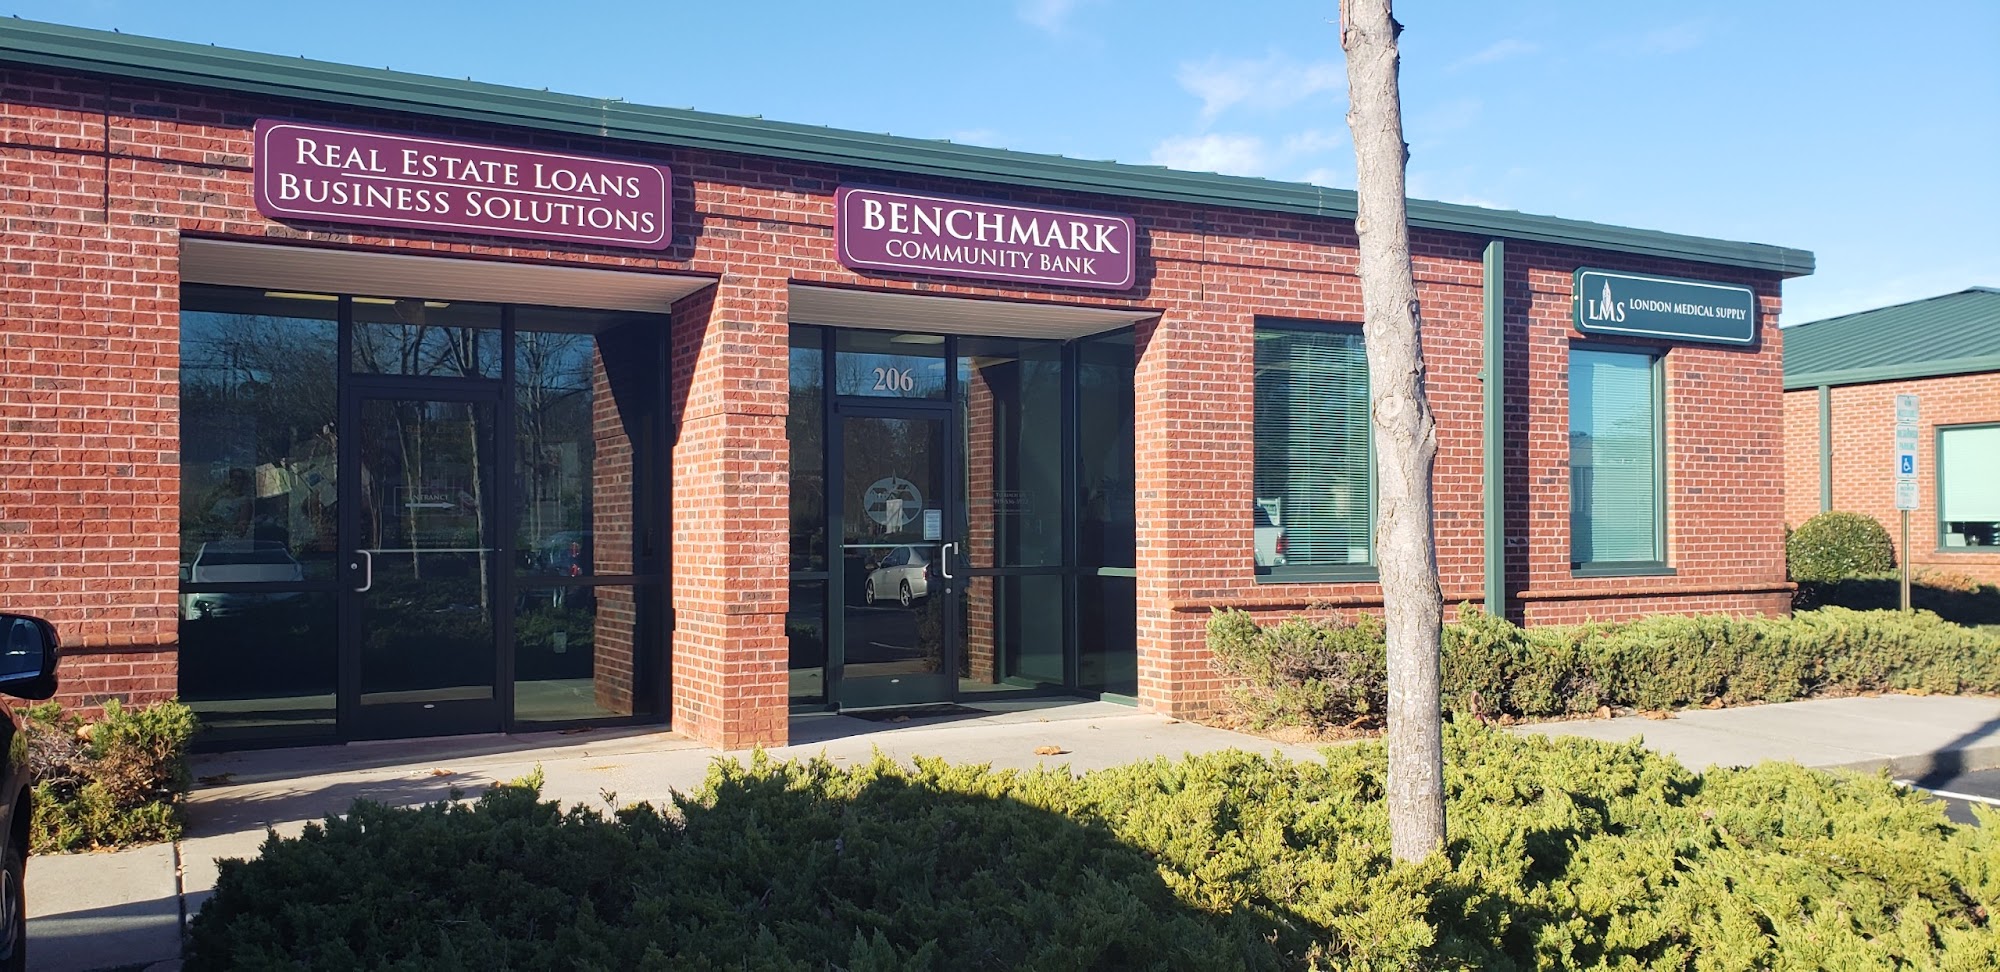 Benchmark Community Bank